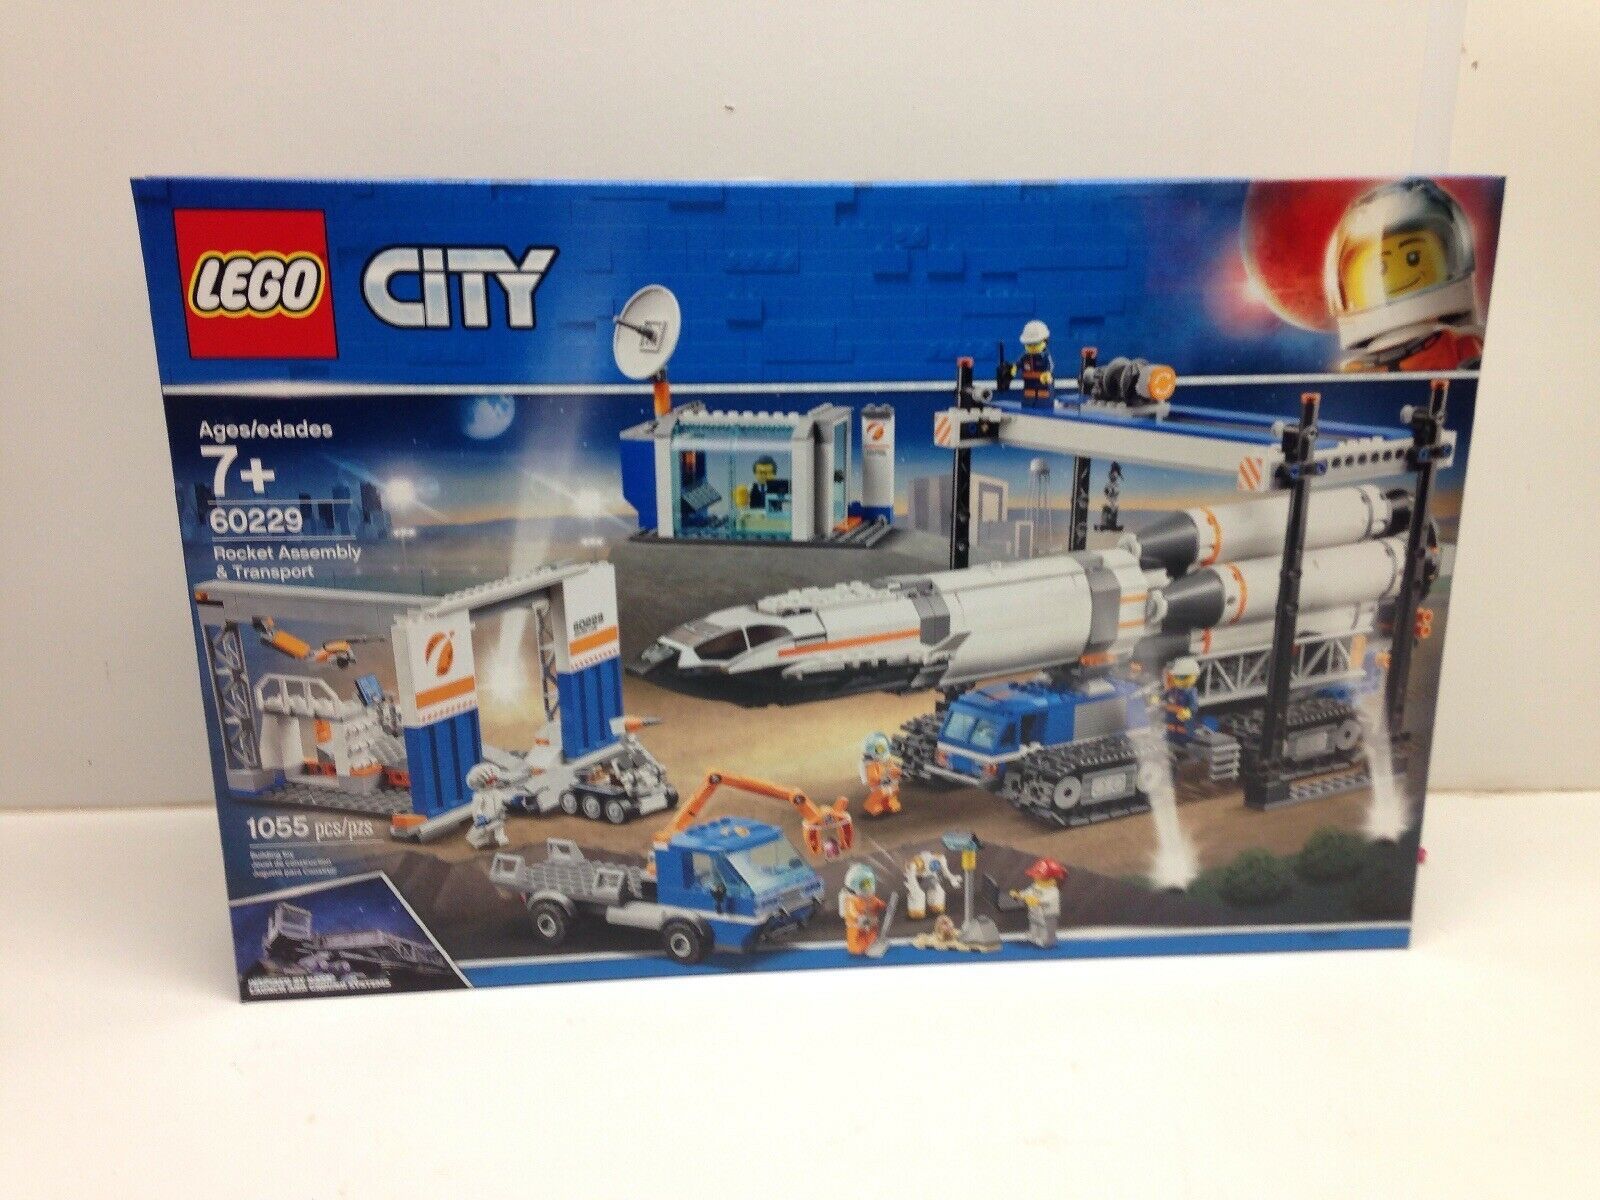 New LEGO City Space Rocket Assembly & Transport 60229 Model Rocket Building Set with Toy Crane 1055pc